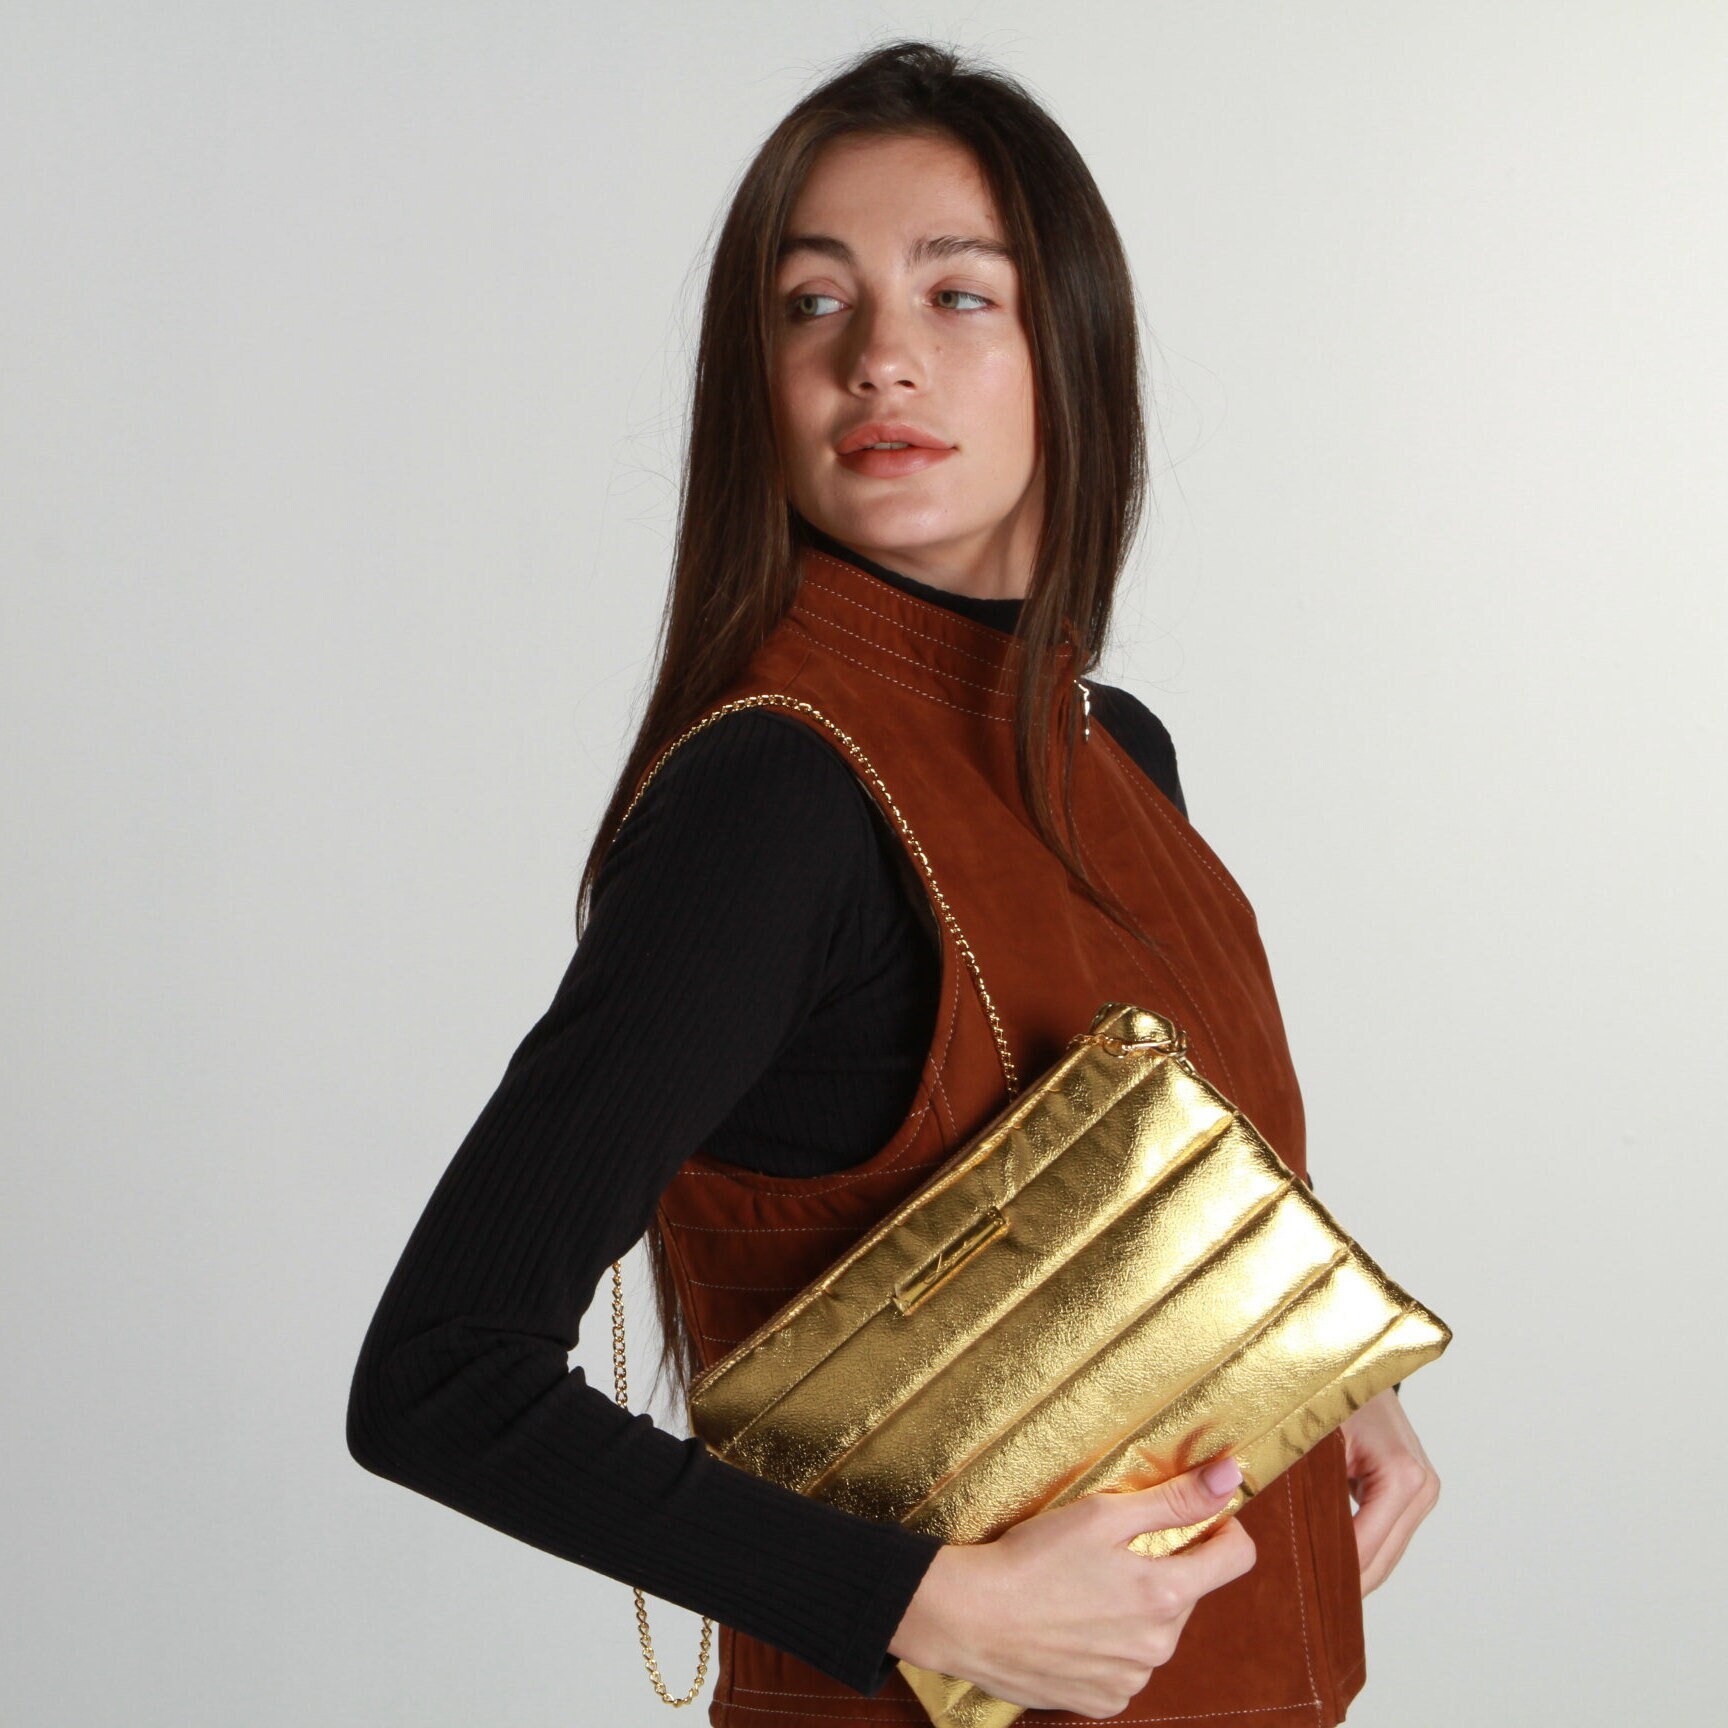 METALLIC GOLD Color Casual CLUTCH Handbag for Women Golden Zipper and Chain  Handle Cross Body and Shoulder Bag, Golden Bag, Lagut 